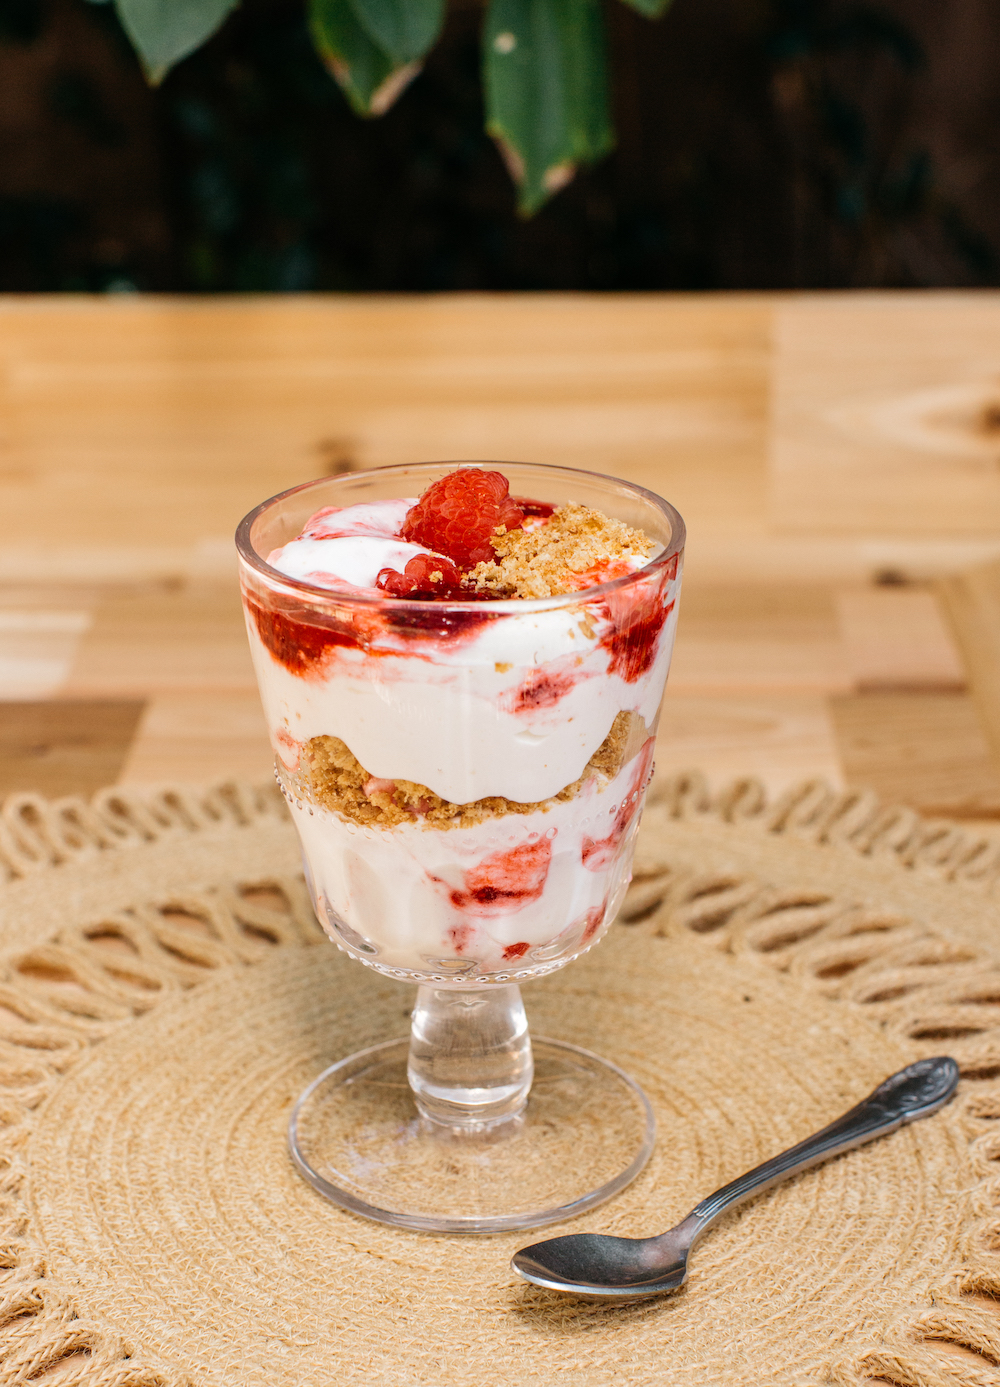 Raspberry & Cream Fool Dessert Recipe